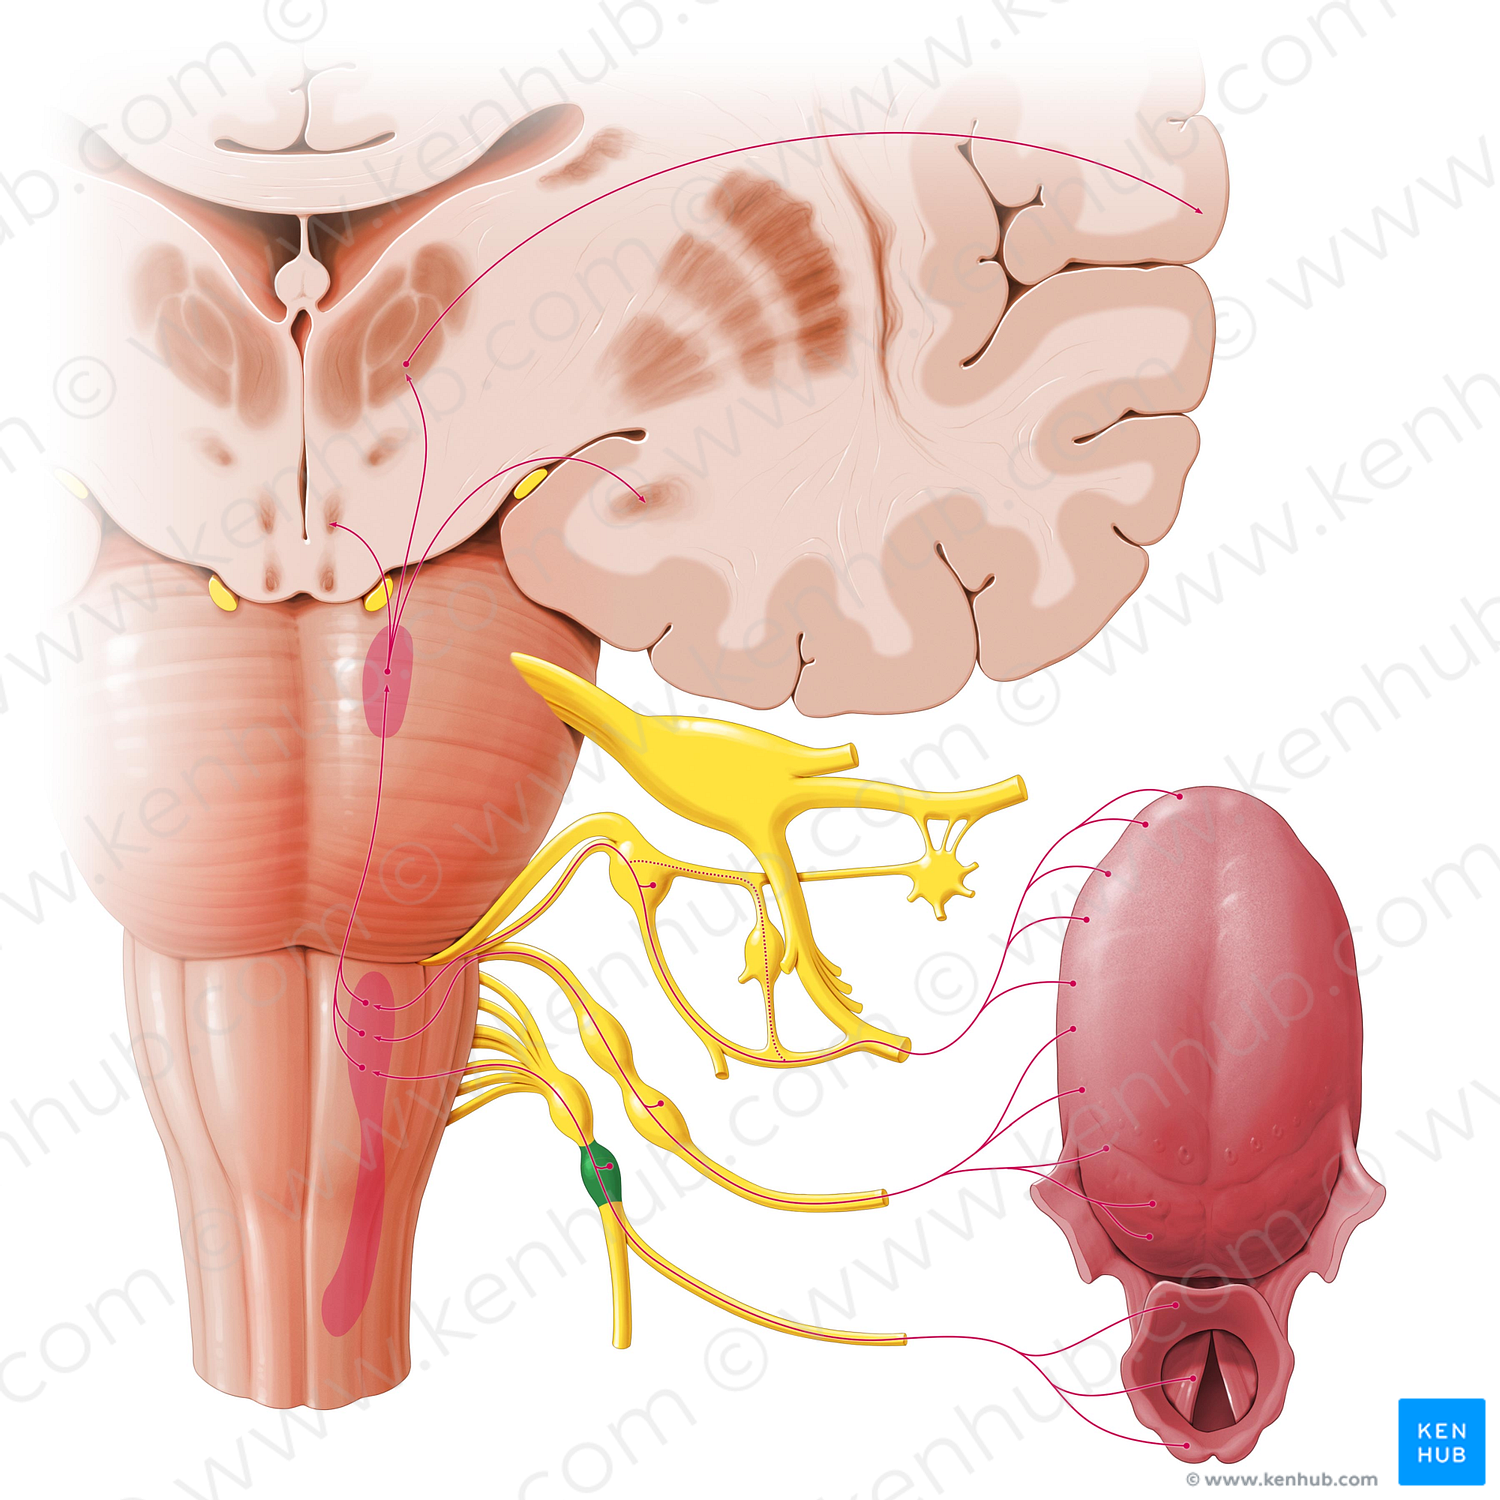 Inferior ganglion of vagus nerve (#3991)